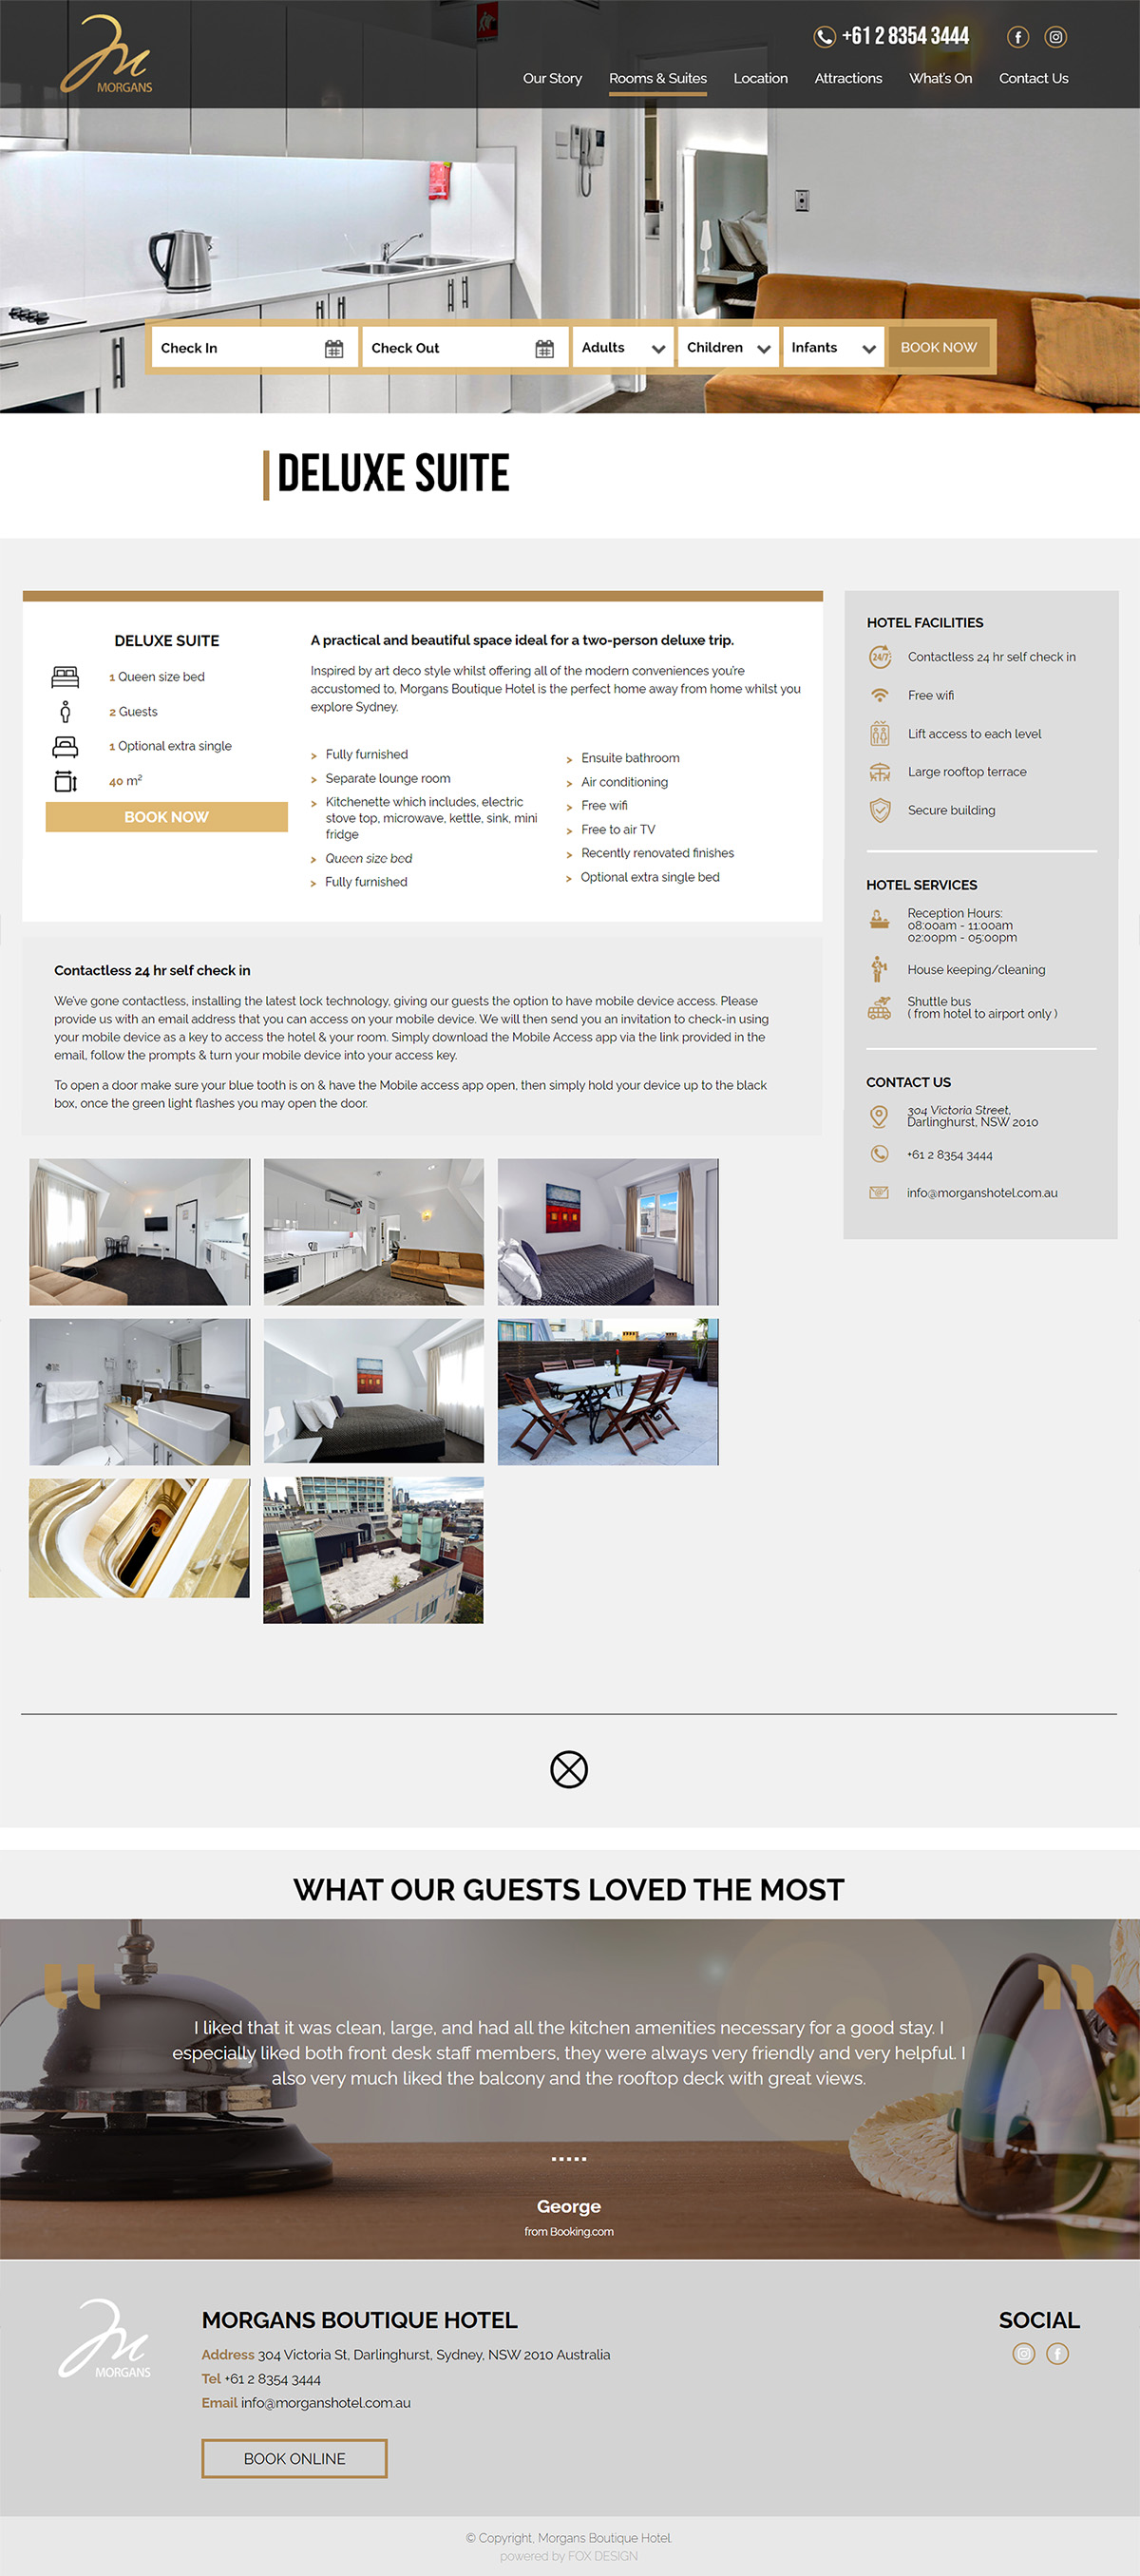 Morgans Boutique Hotel Website Design, Online Marketing